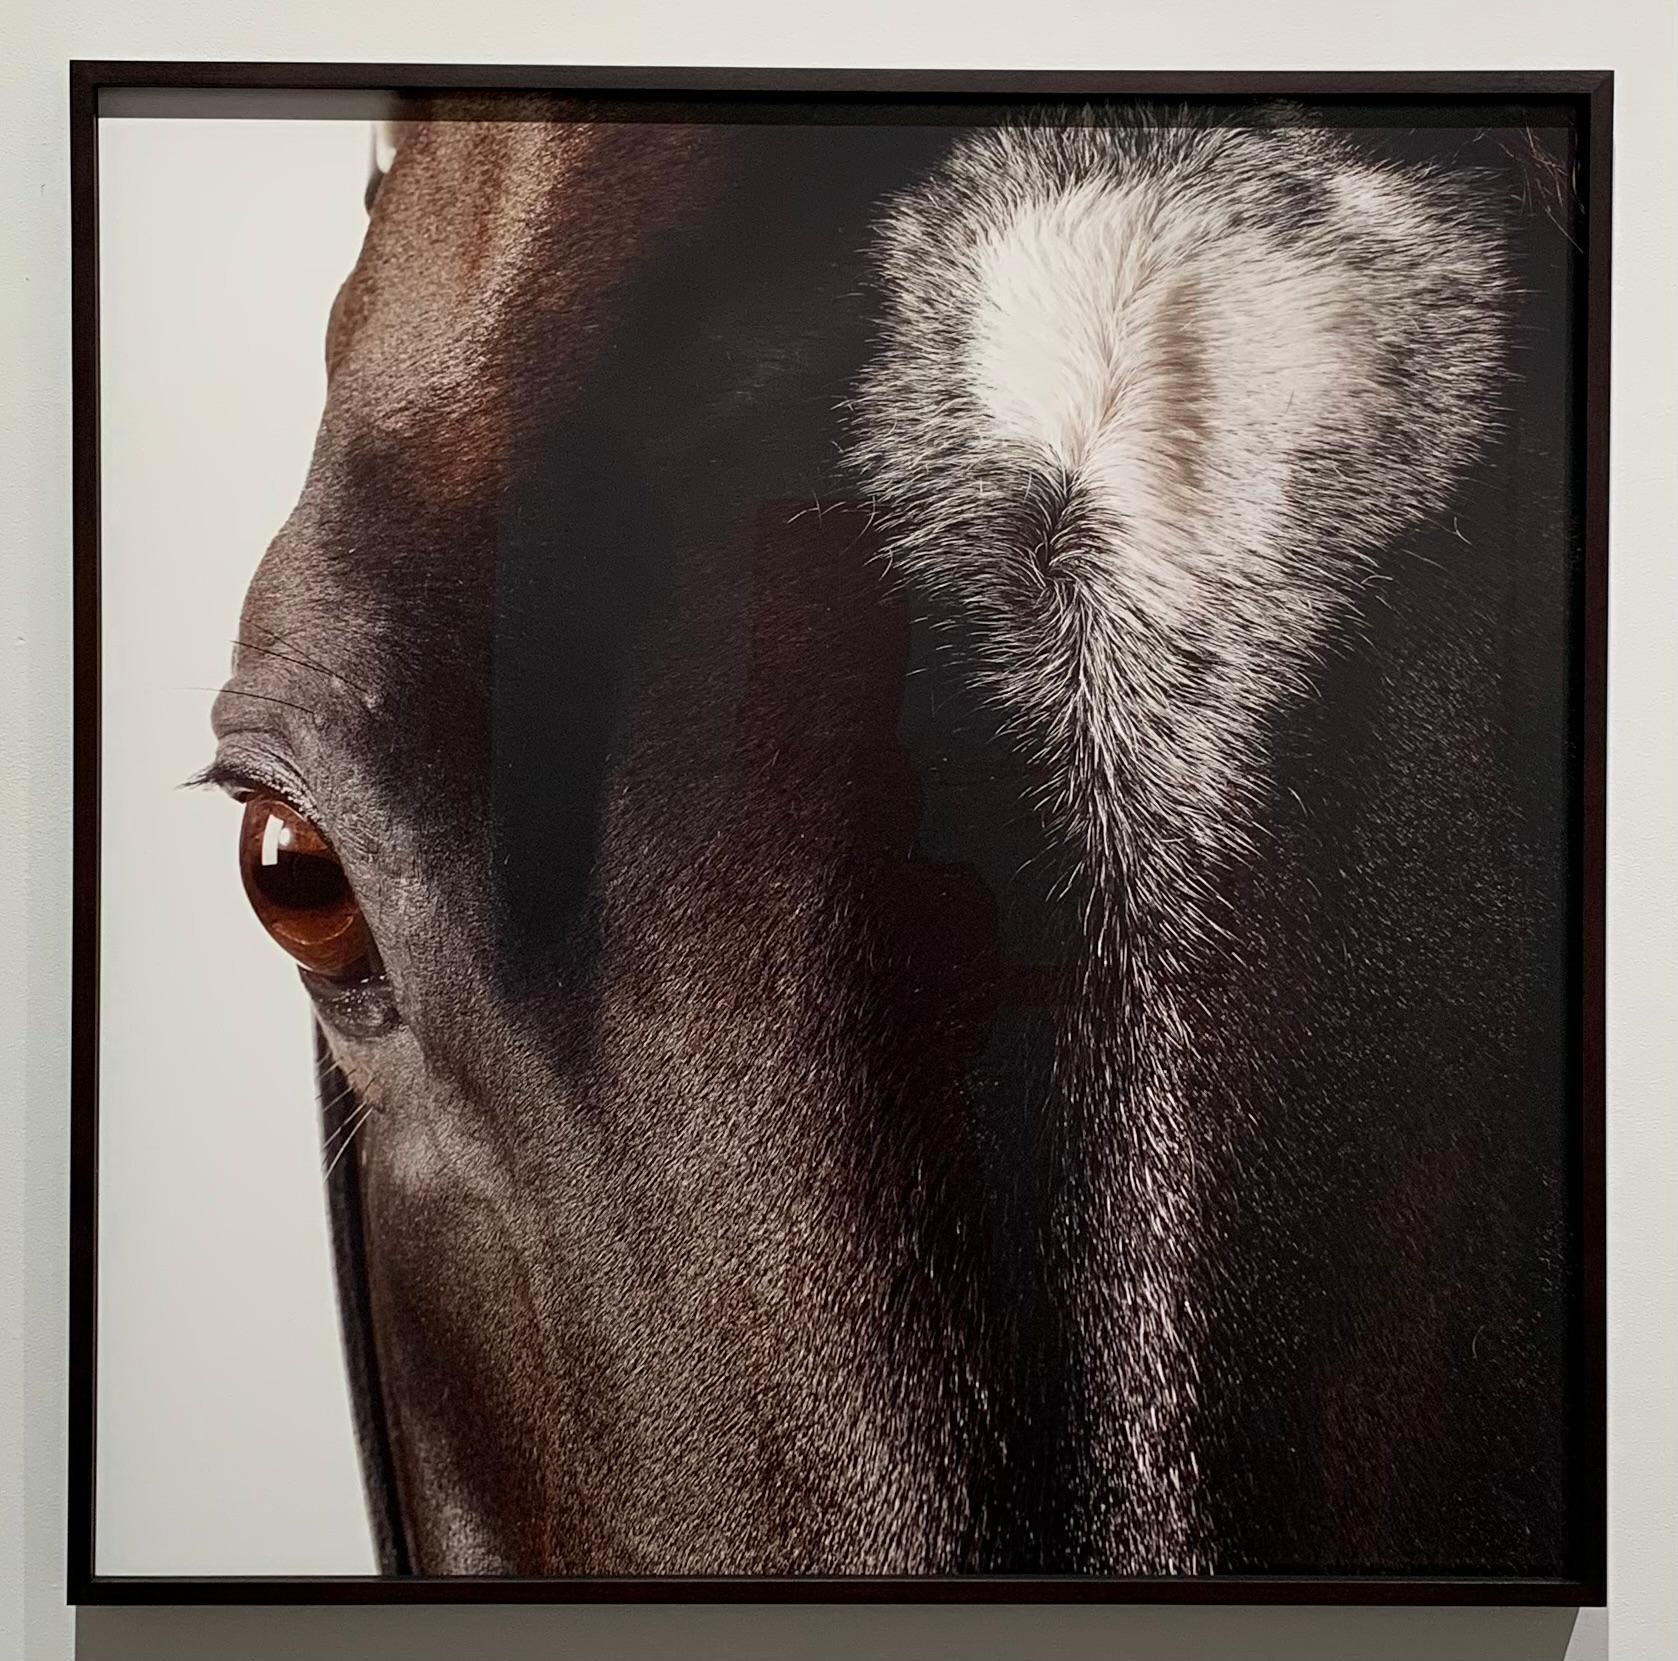 Medaglia d’Oro, Horse head and eye - Stallion Portrait unframed Print on Paper For Sale 2